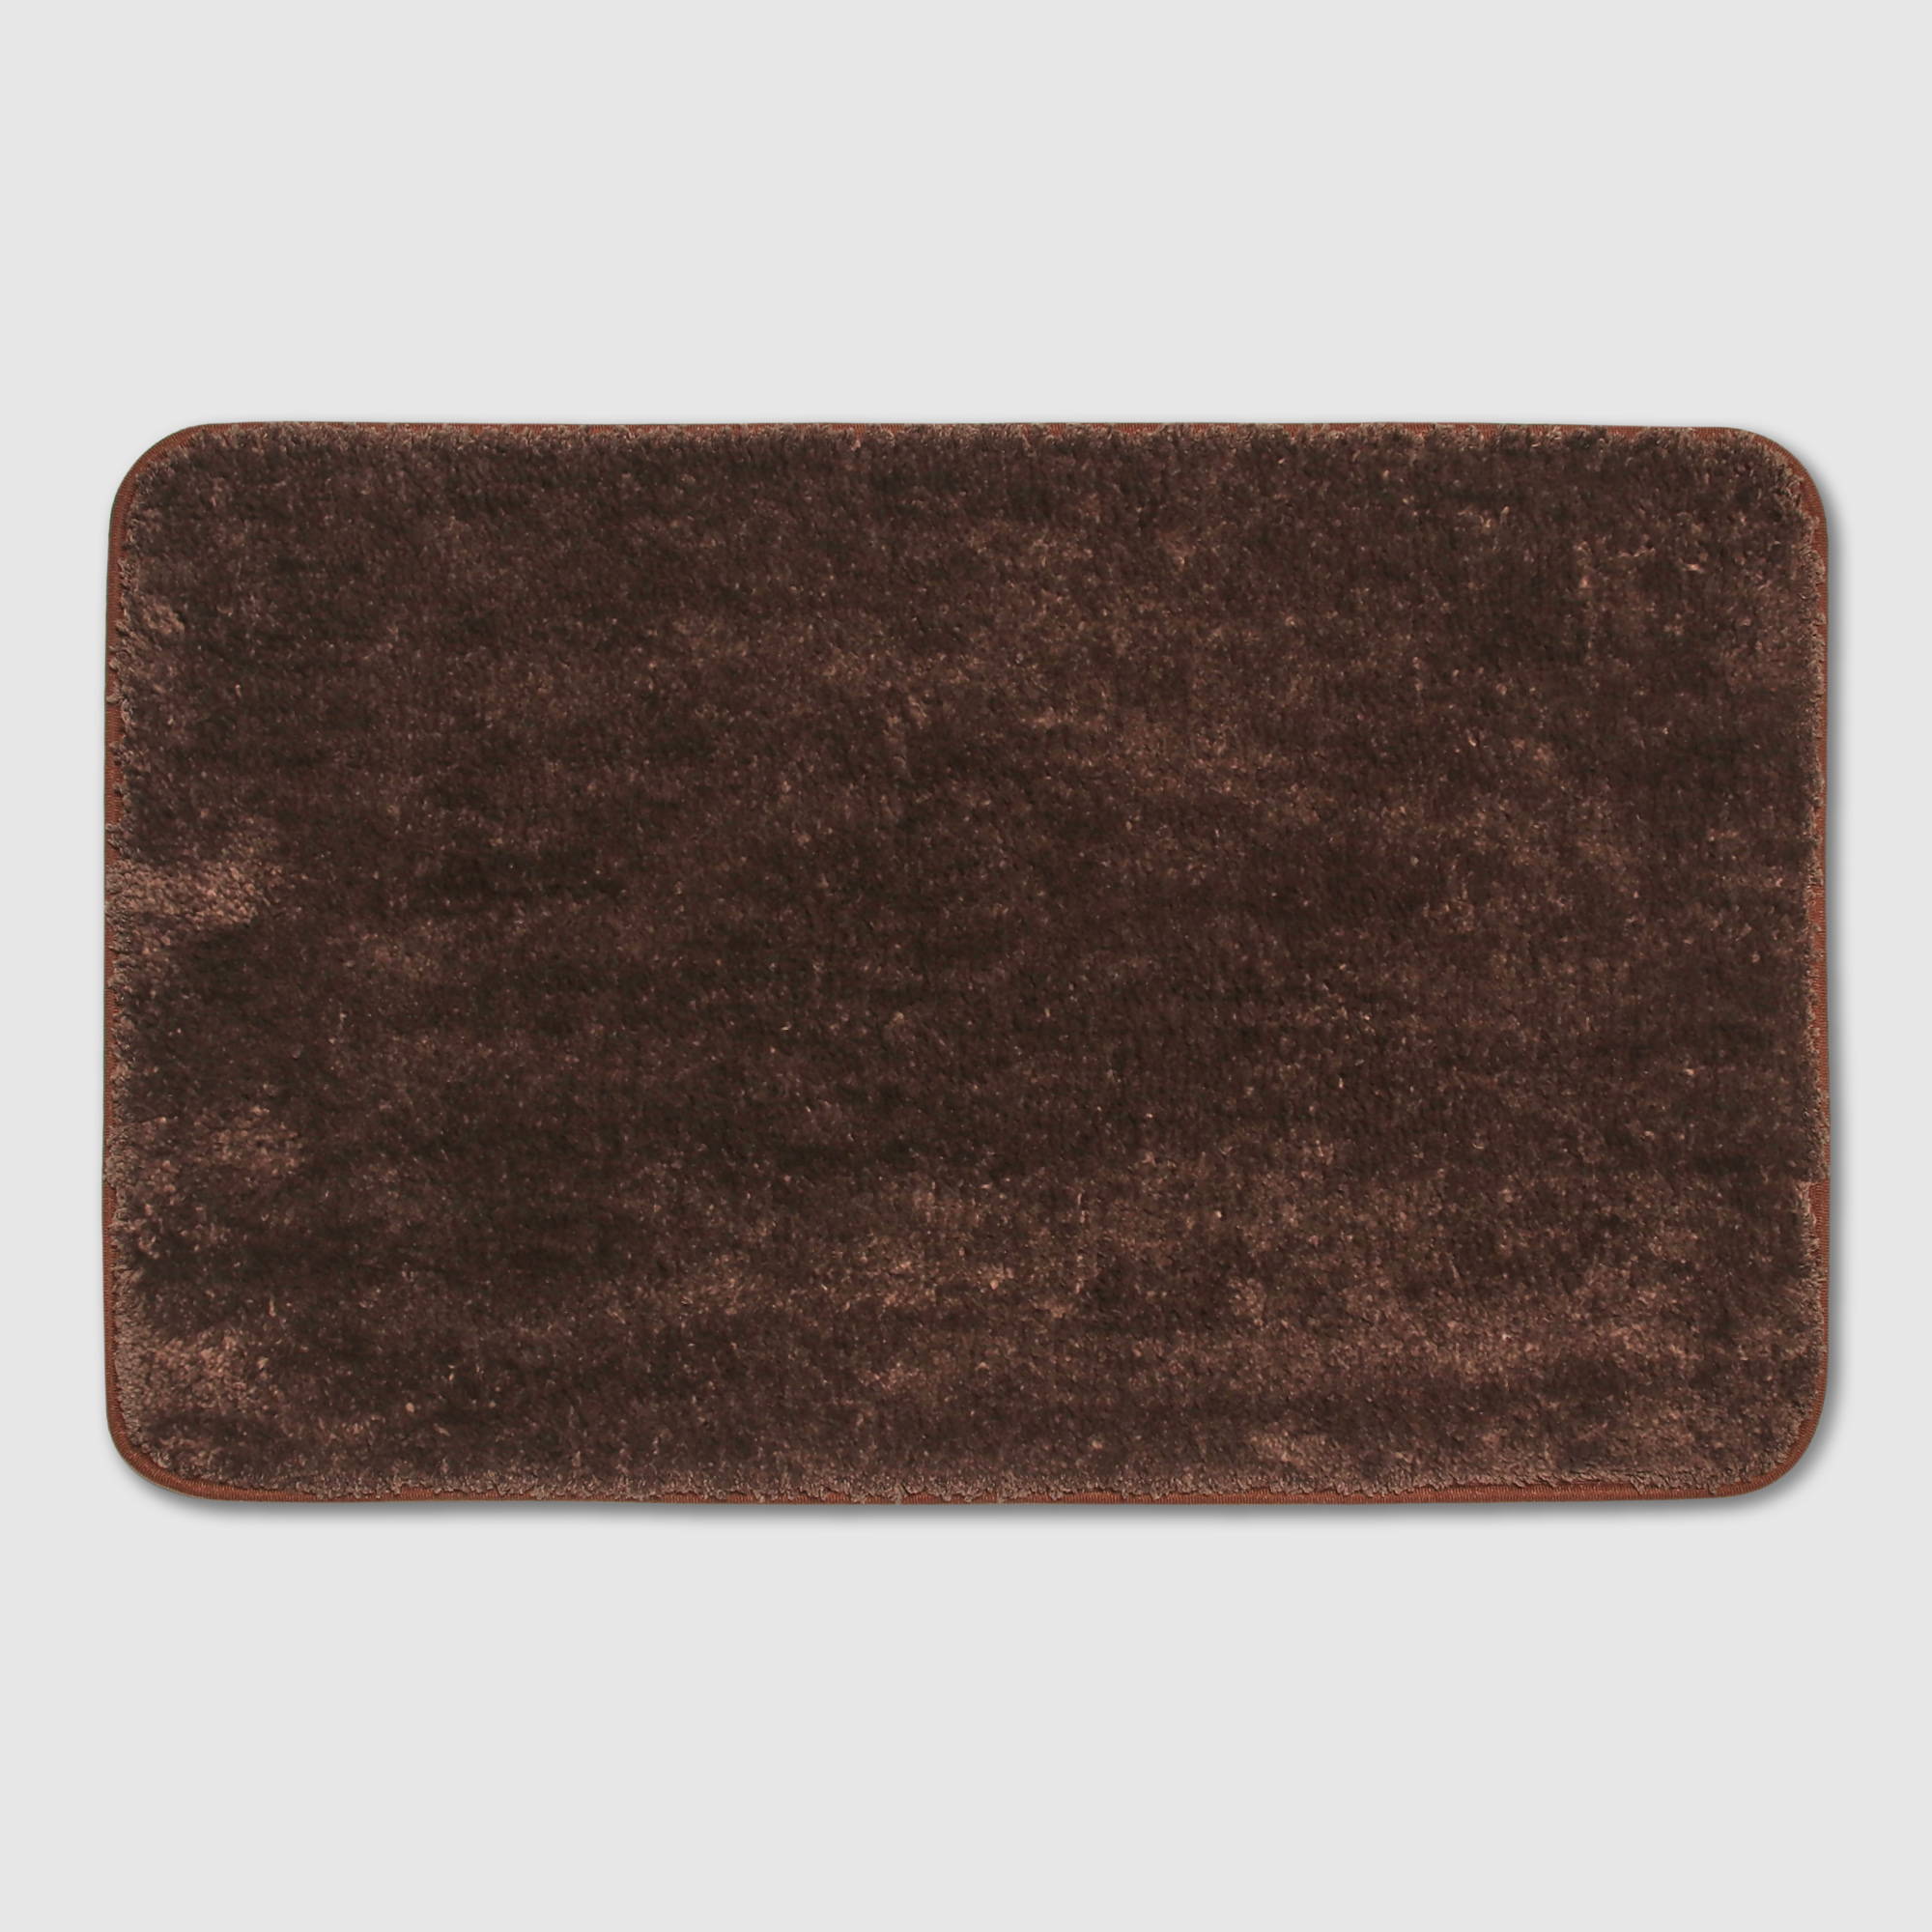 Коврик Silverstone Carpet коричневый 50х80 см